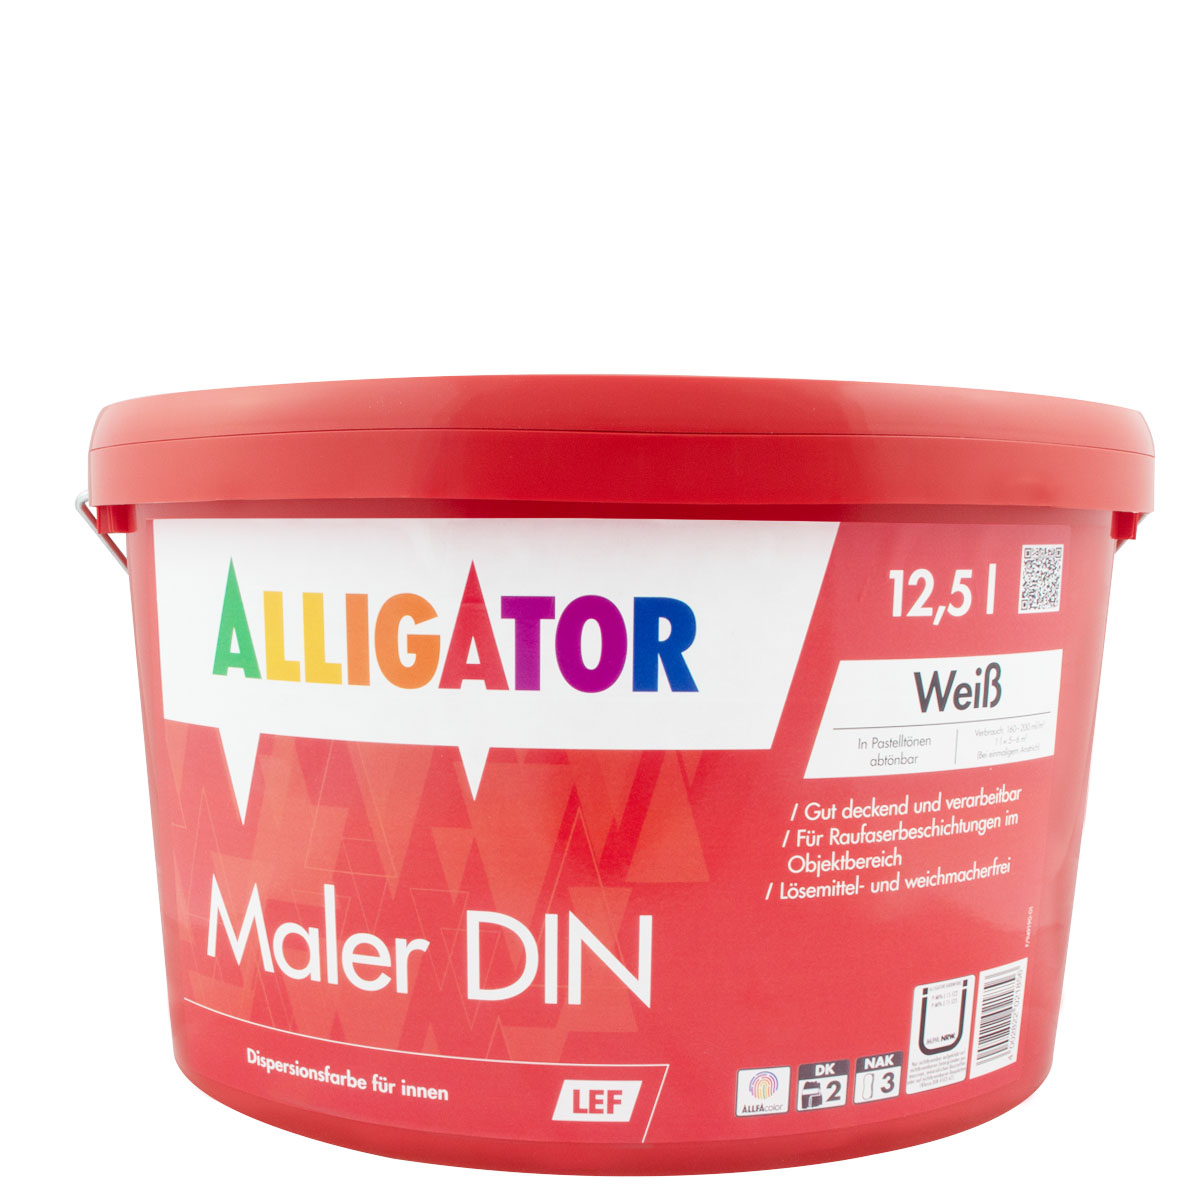 Alligator Maler DIN LEF 12,5L reinweiss RAL9010, sehr gut deckende Wandfarbe